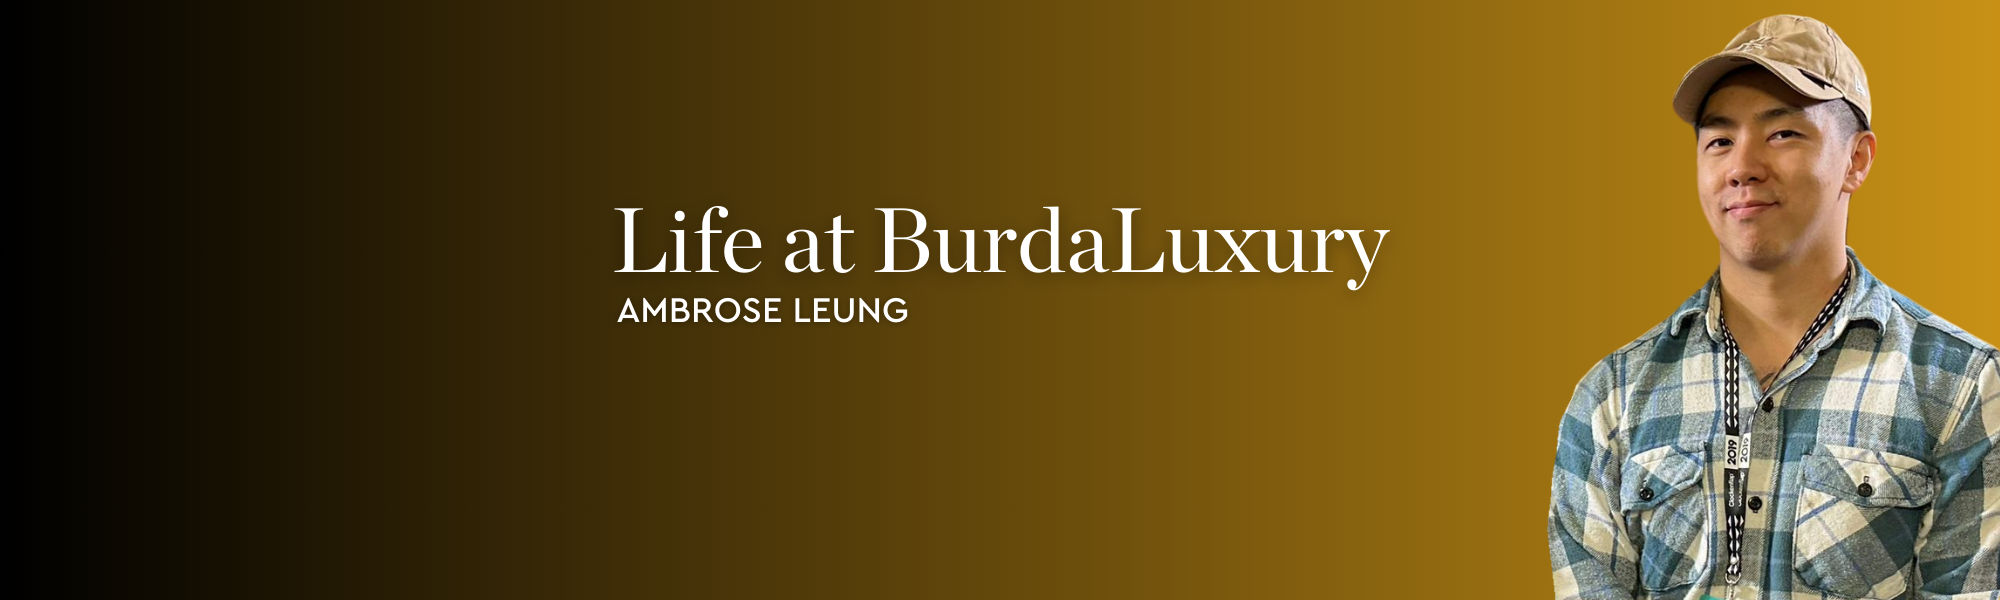 Life at BurdaLuxury – Ambrose Leung